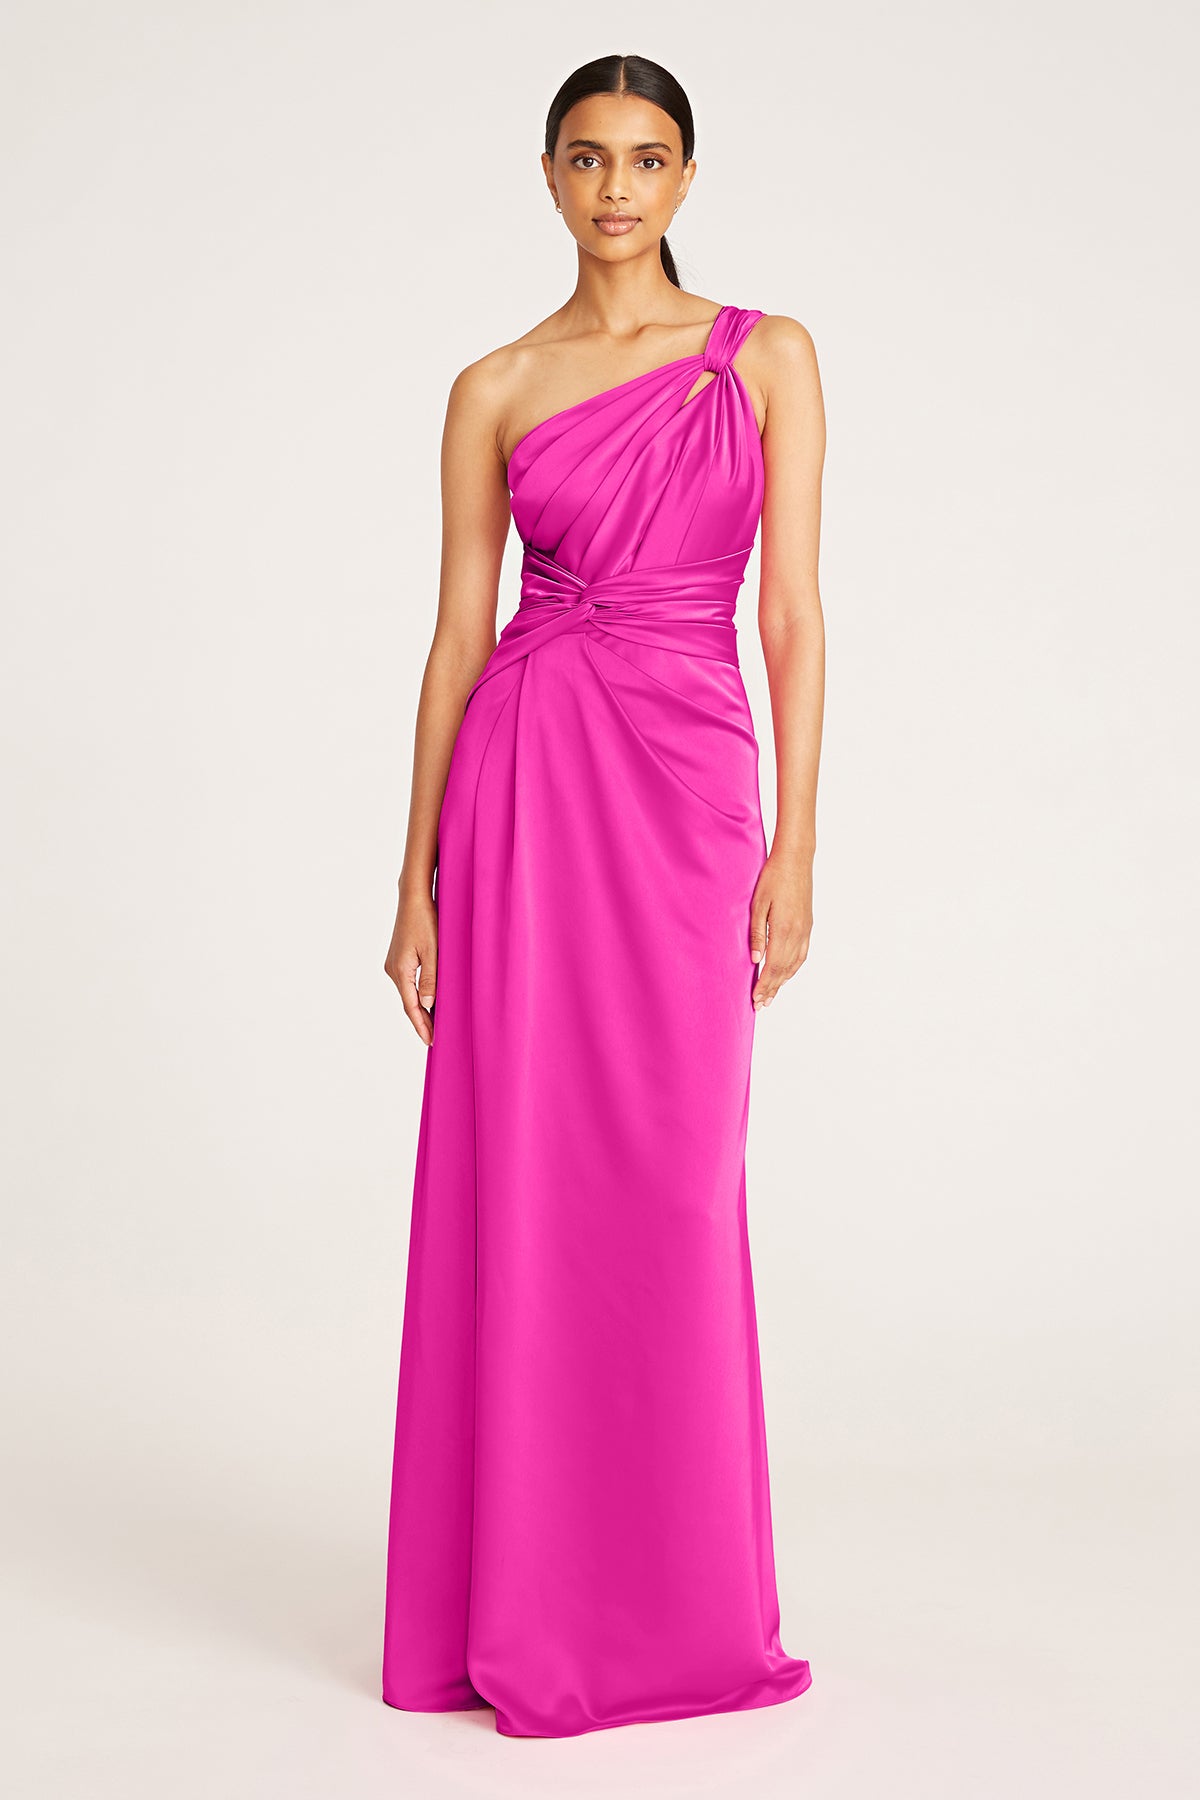 Best Wedding Dresses Online Bridesmaid & Prom Gowns - VQ